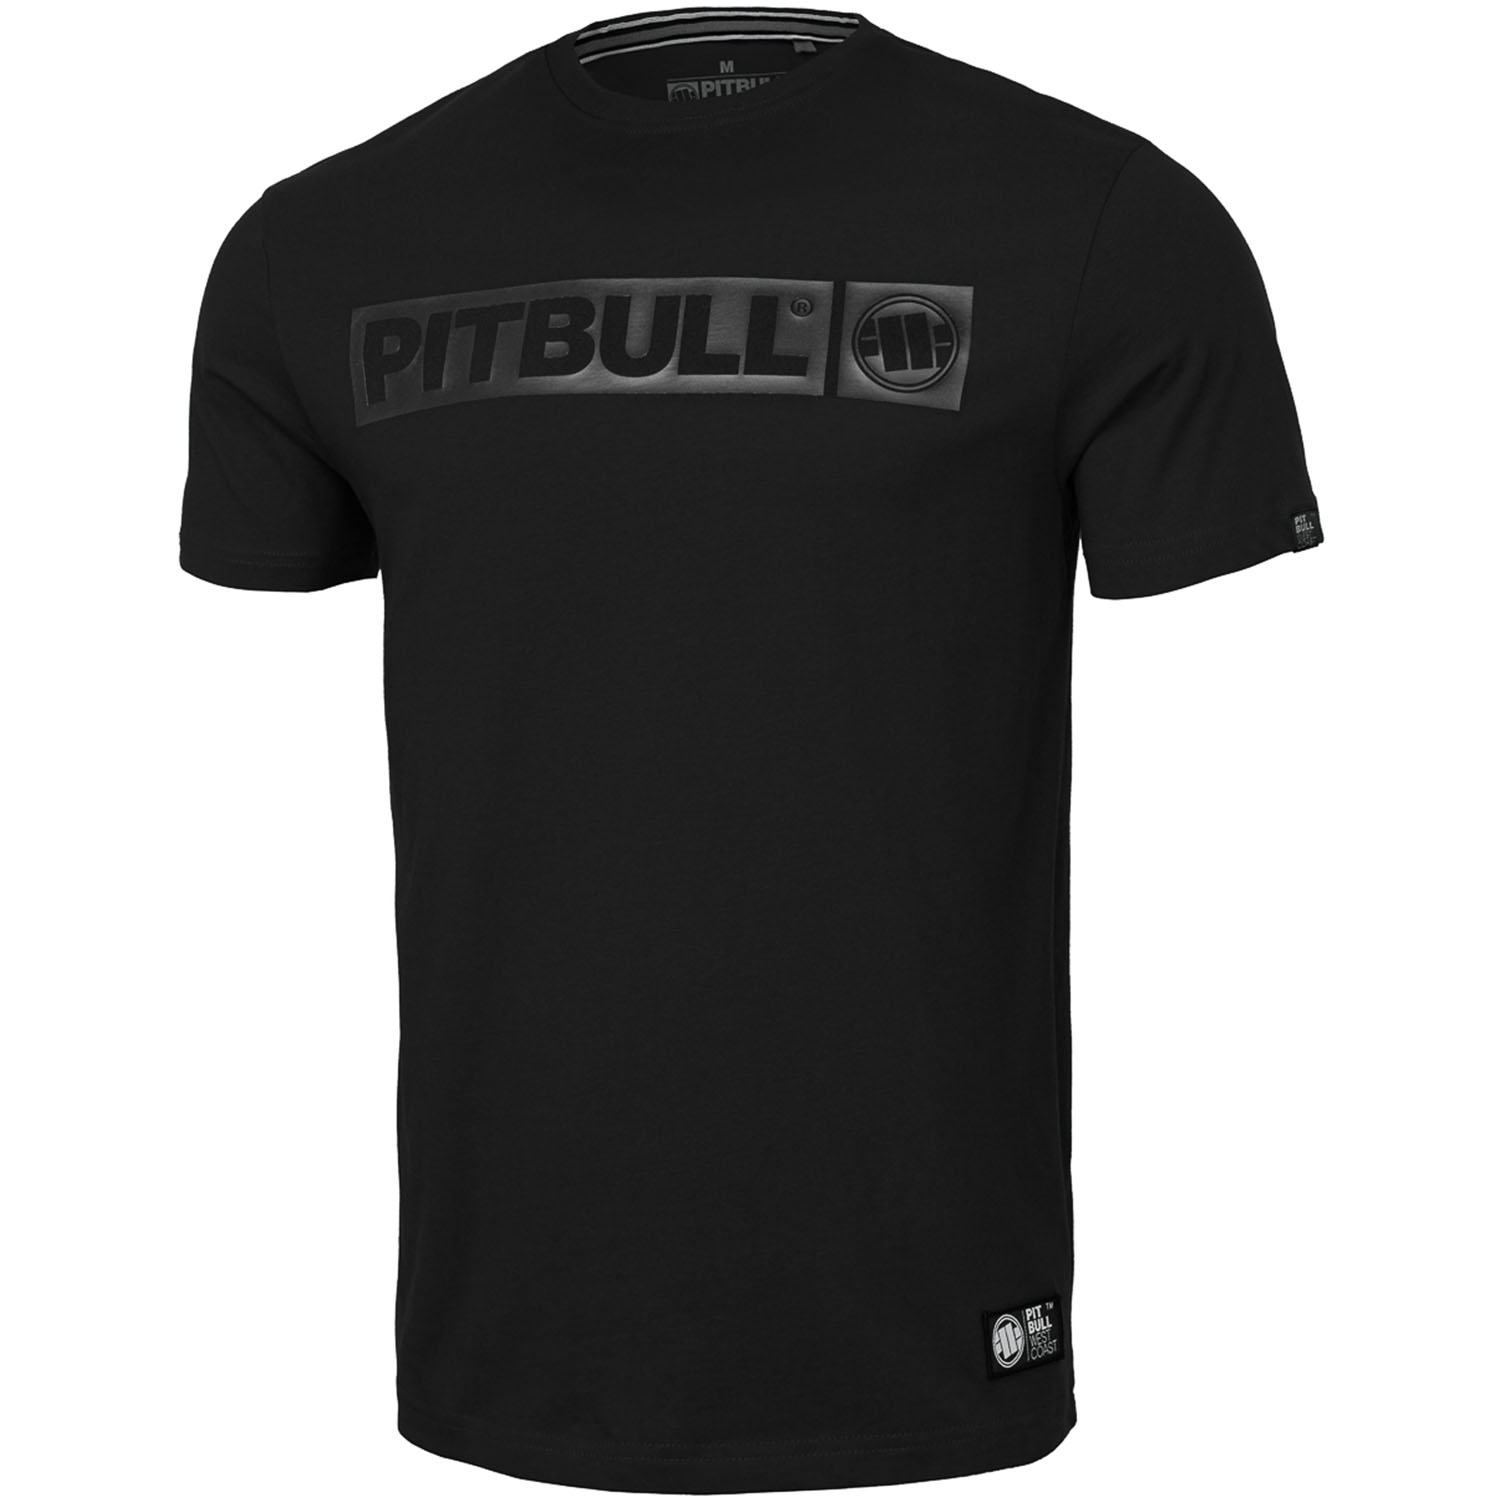 Pit Bull West Coast T-Shirt, Hilltop All Black, black